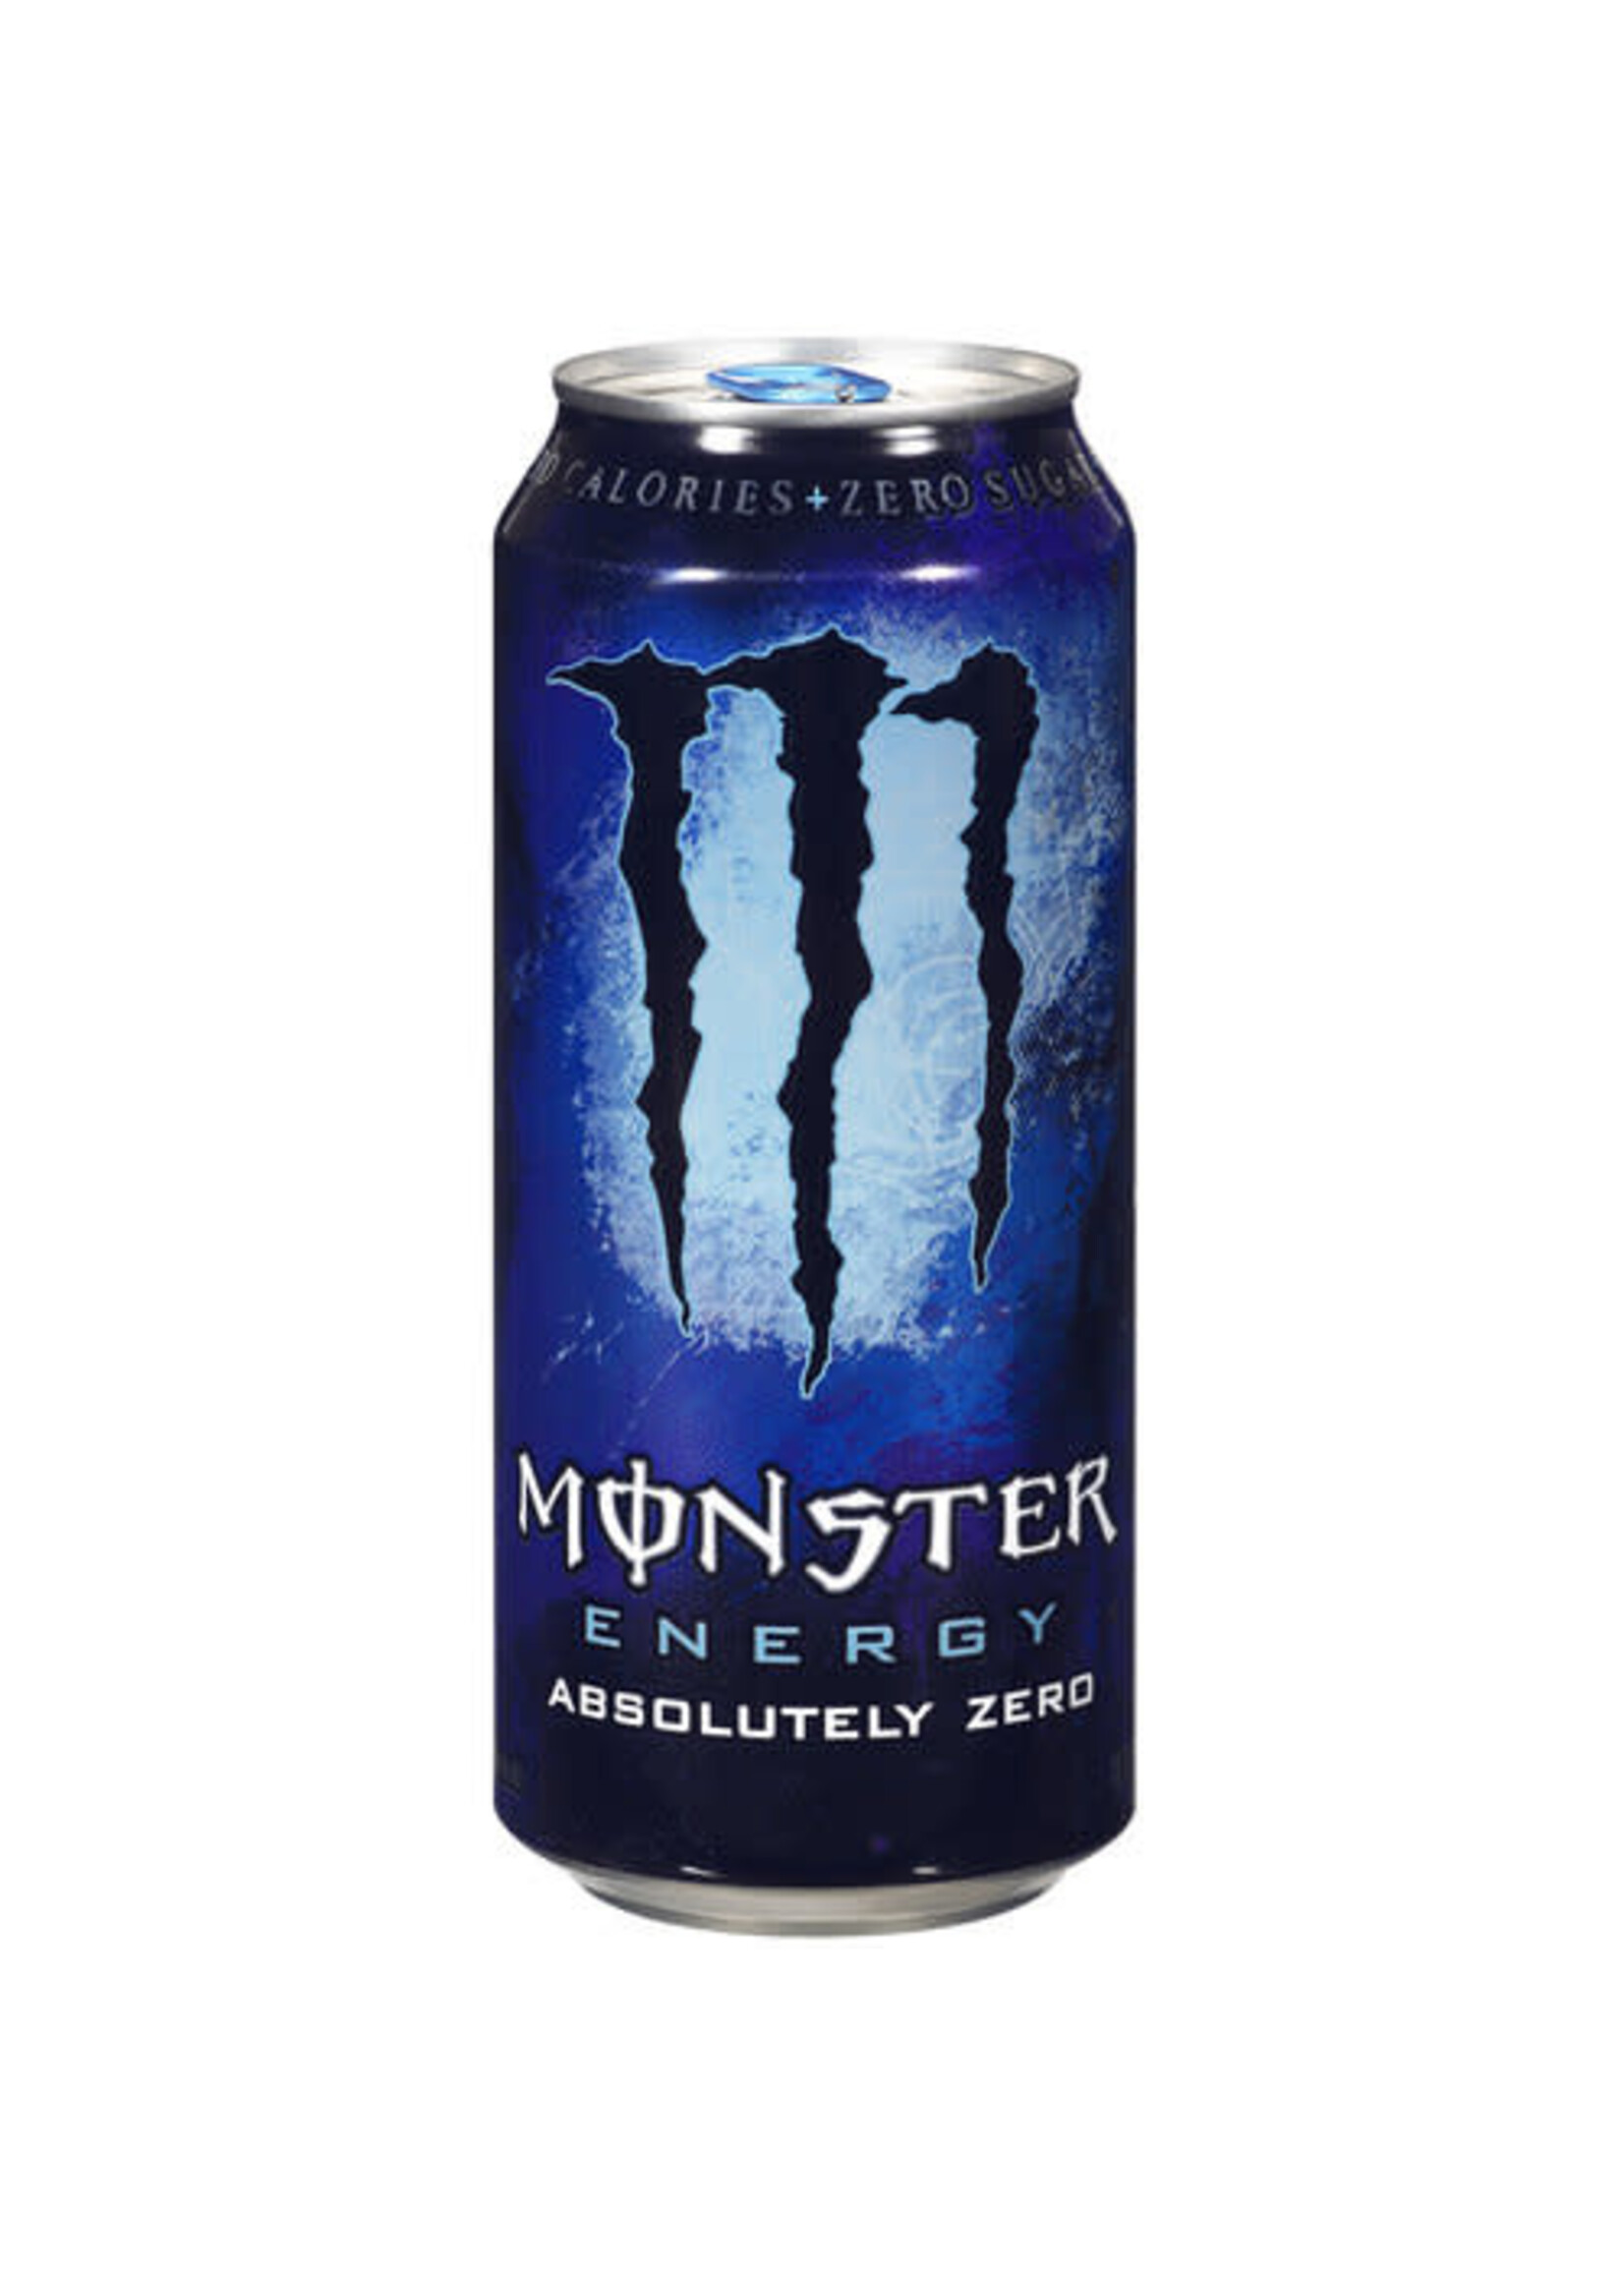 Monster Zero Sugar Energy Drink 16oz